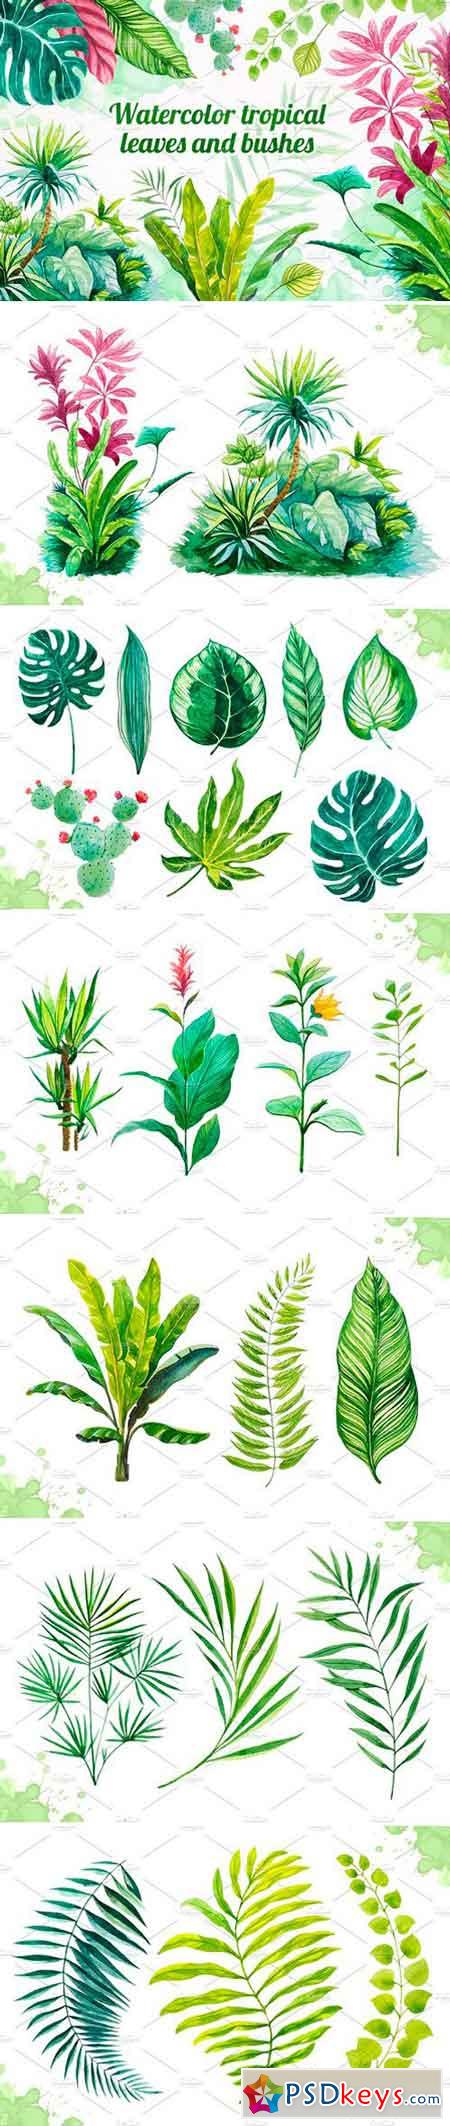 Watercolor tropical leaves set#2 713604